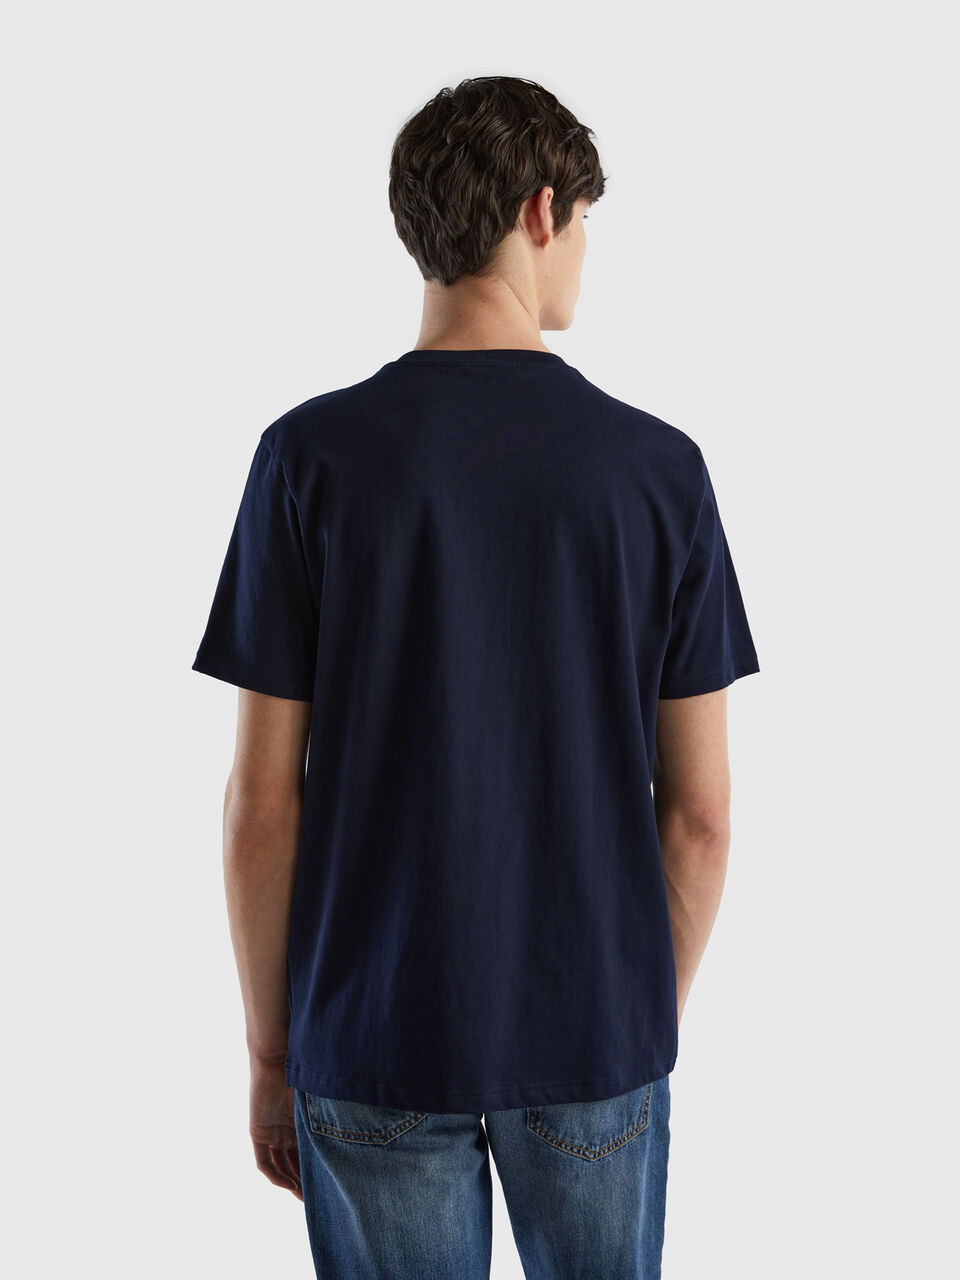 Blue cotton Dark basic 100% - t-shirt Benetton organic |